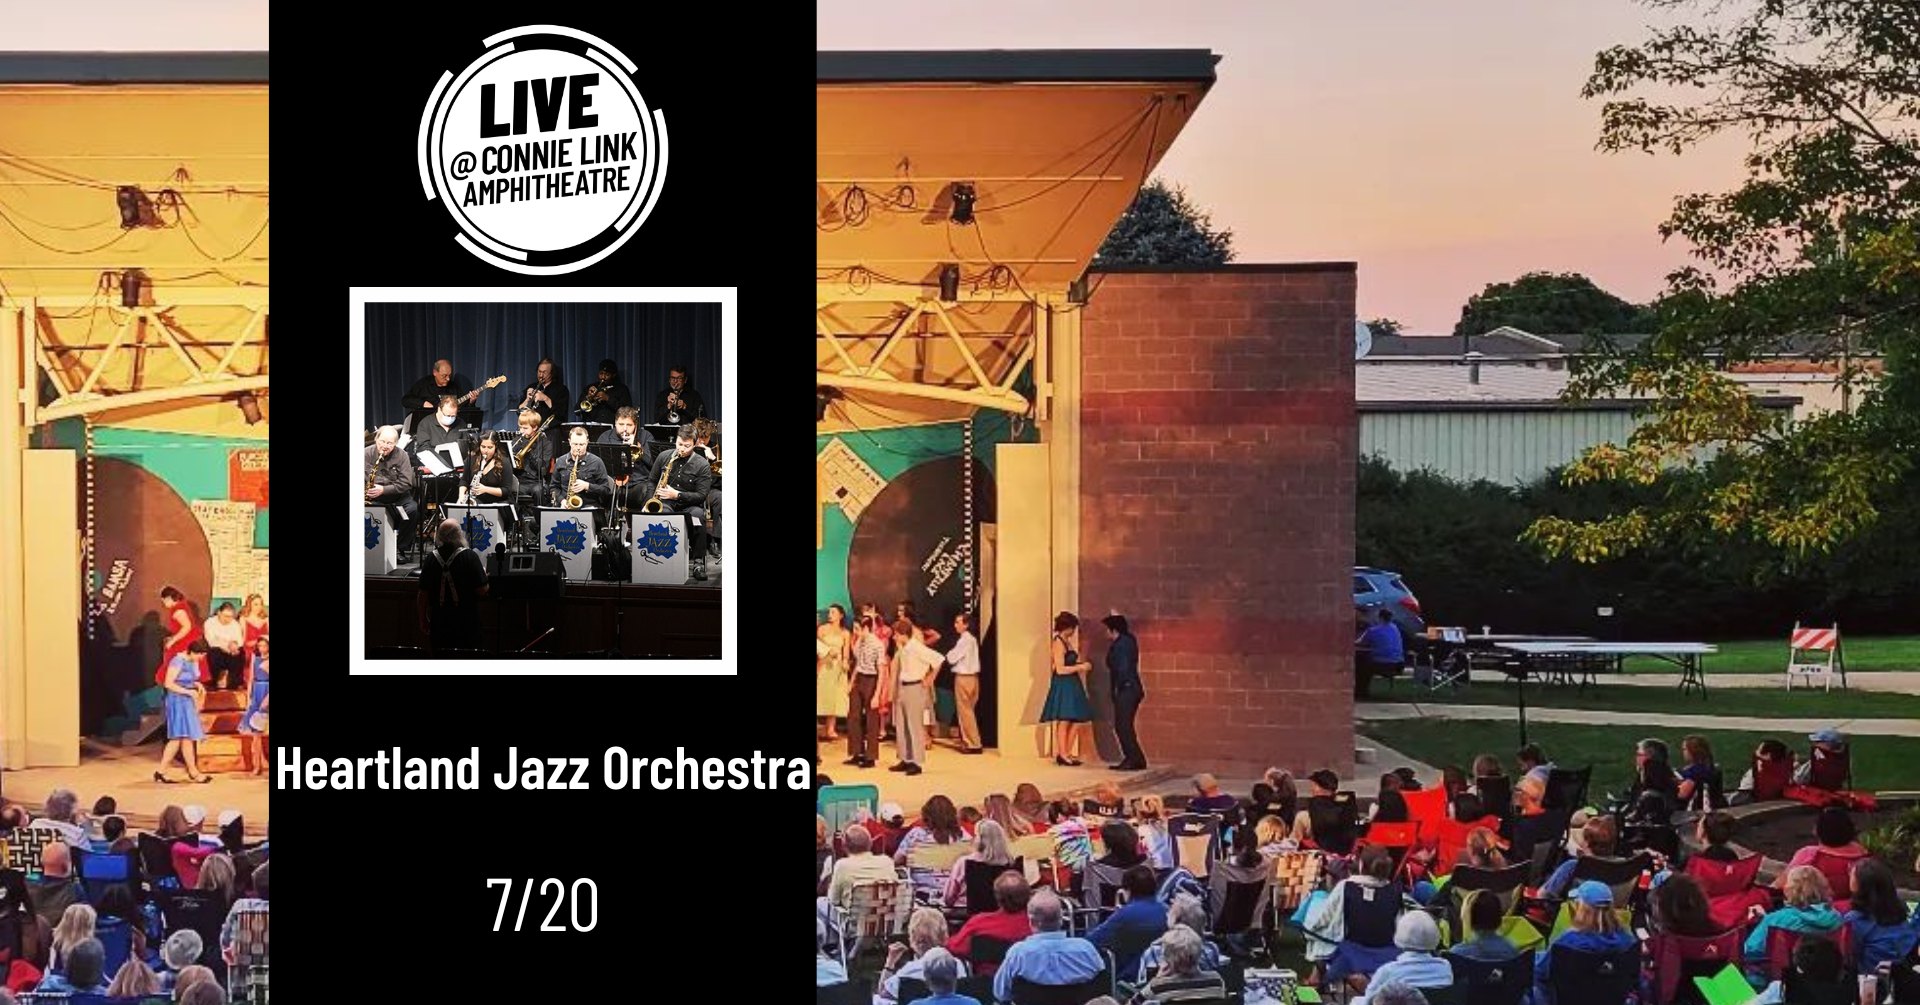 Normal LIVE presents Heartland Jazz Orchestra @ Connie Link Amphitheatre